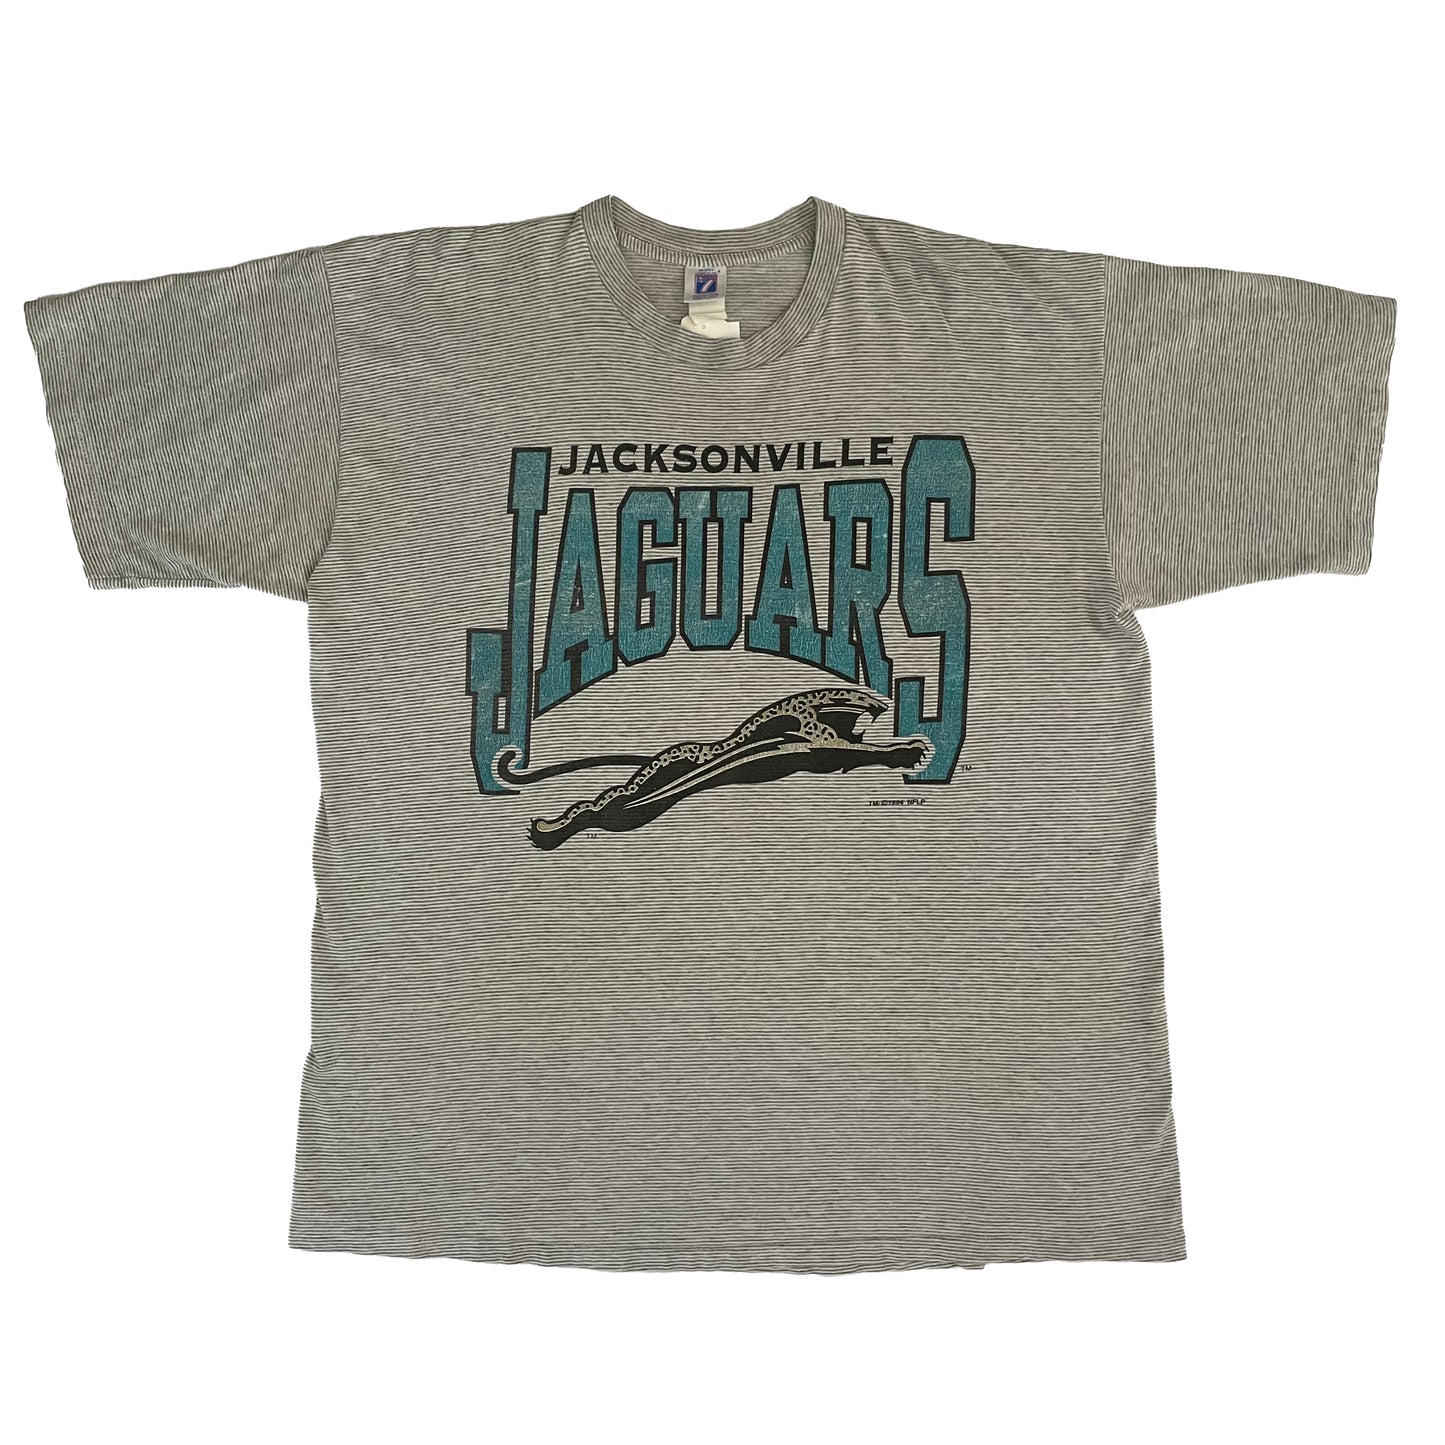 Jacksonville Jaguars banned logo shirt